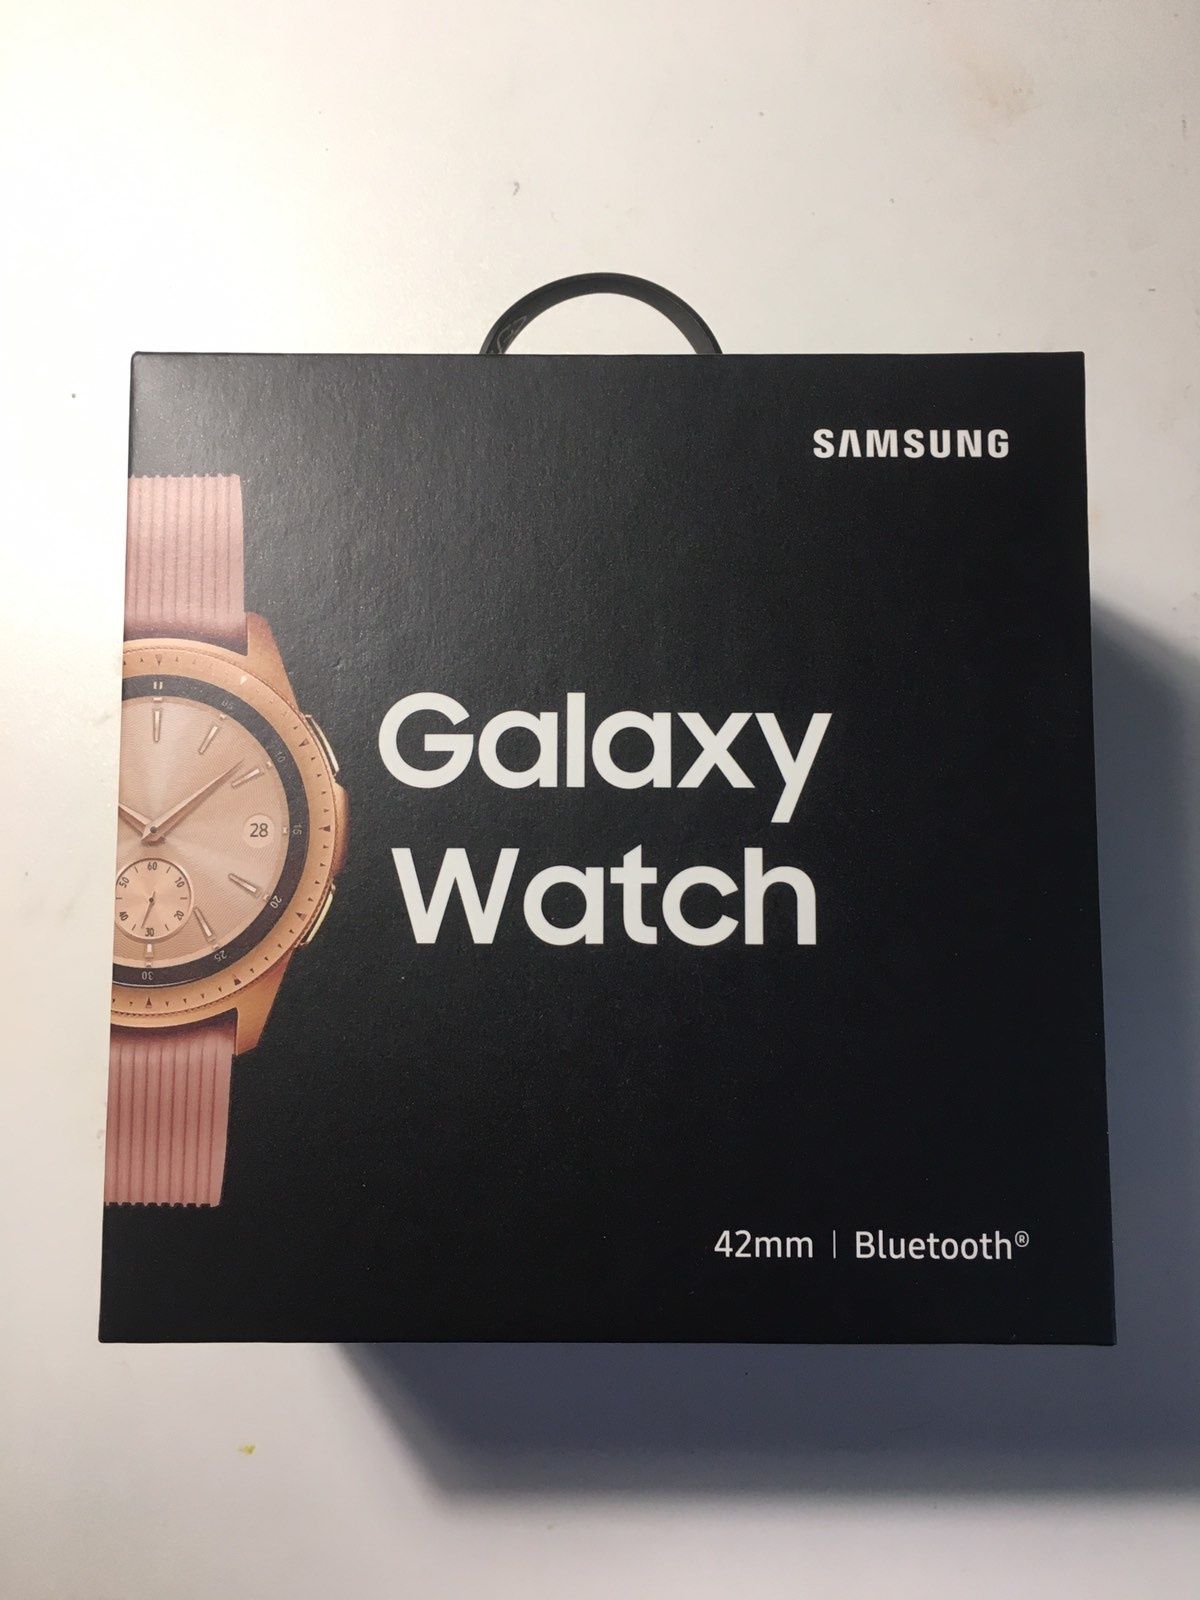 Samsung Galaxy Watch R810 42mm gold
SM